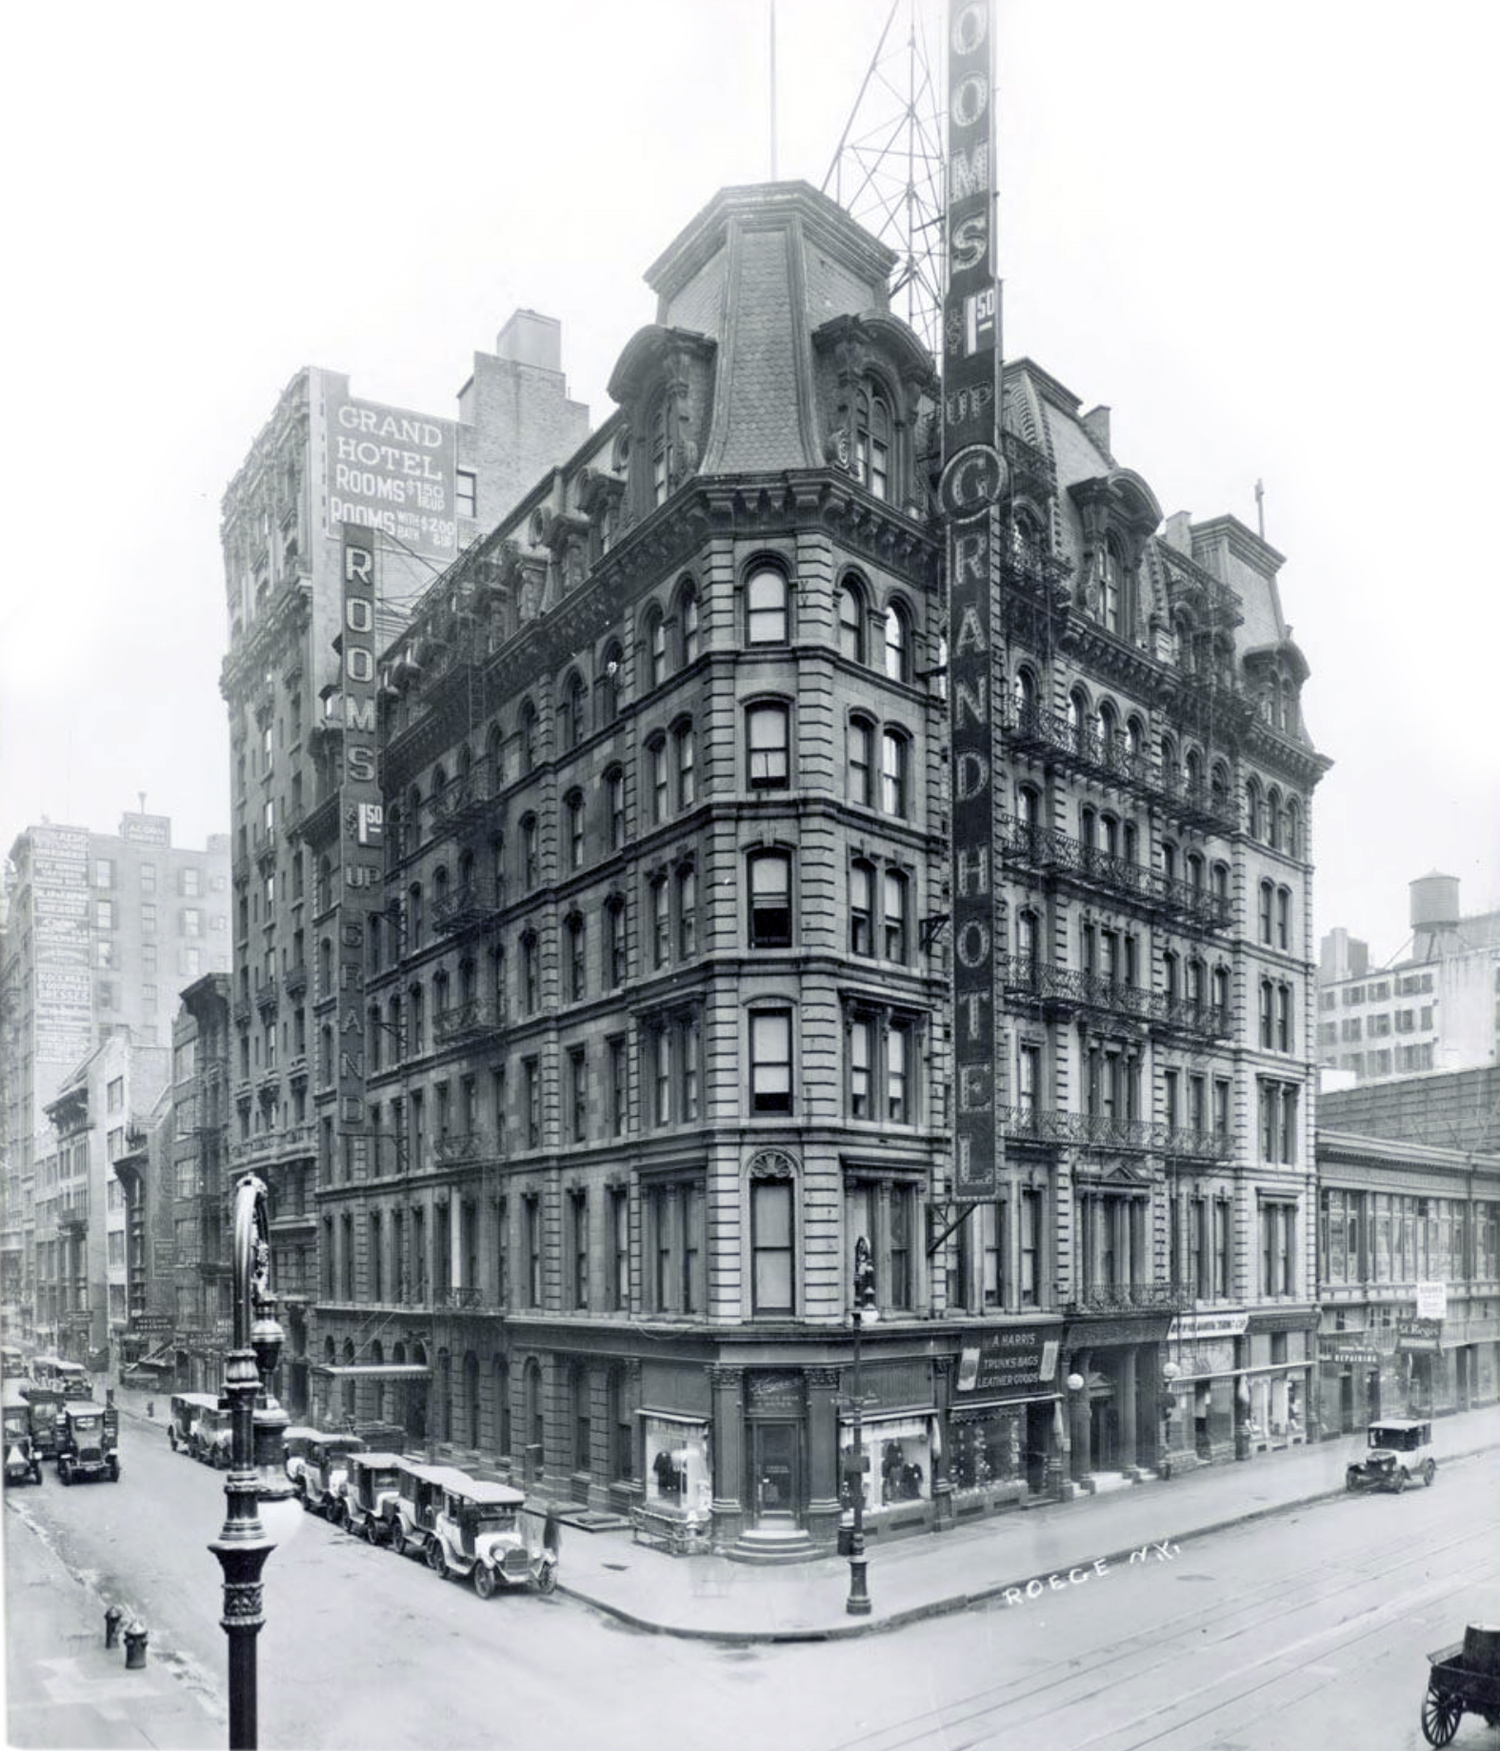 Grand Hotel on Broadway, New York 1920